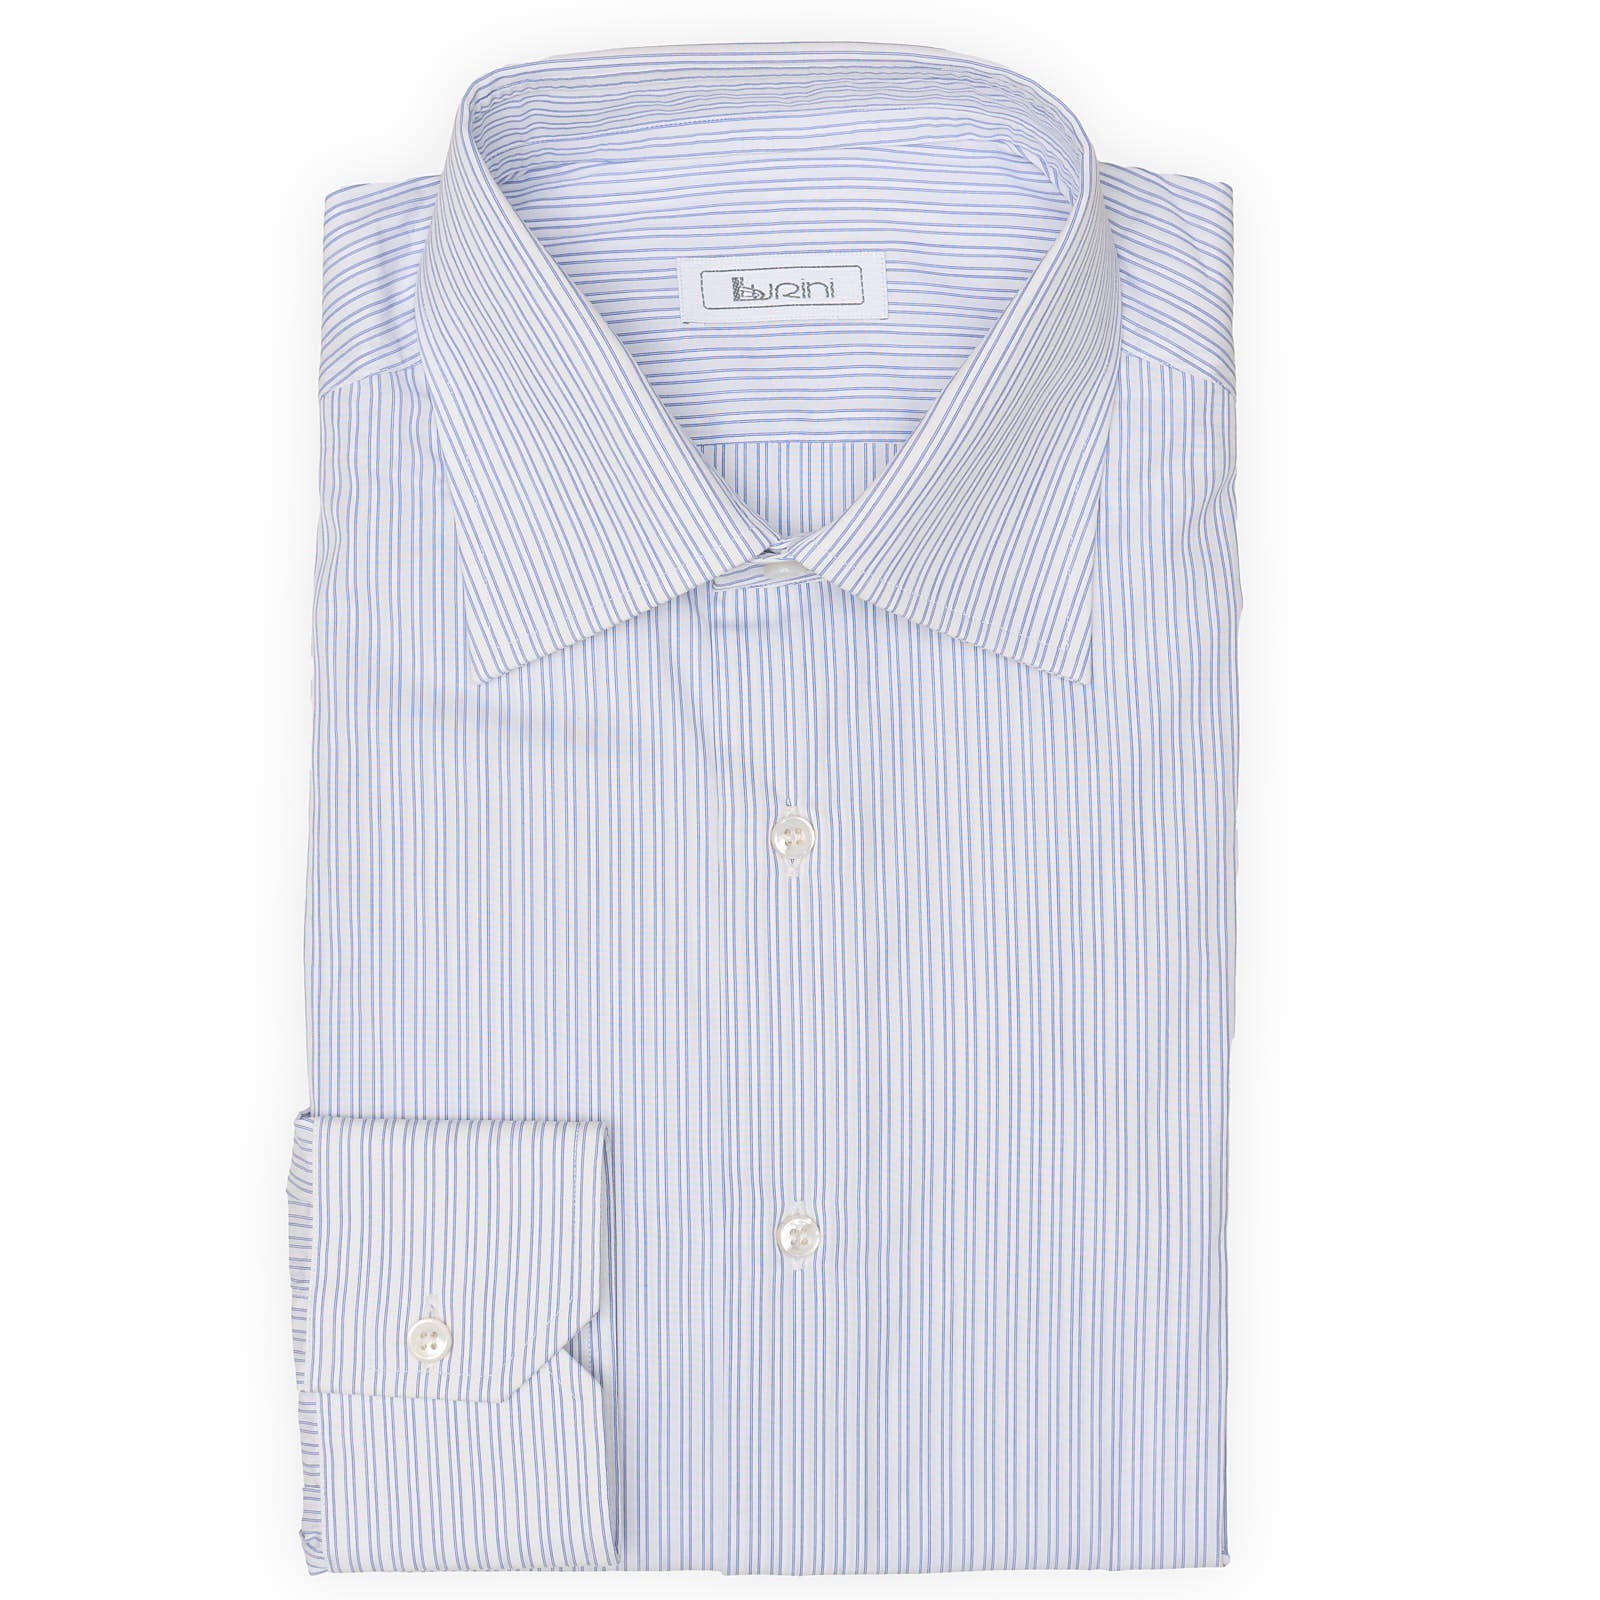 BURINI Luxury Blue Striped Cotton Dress Shirt EU 41 NEW US 16